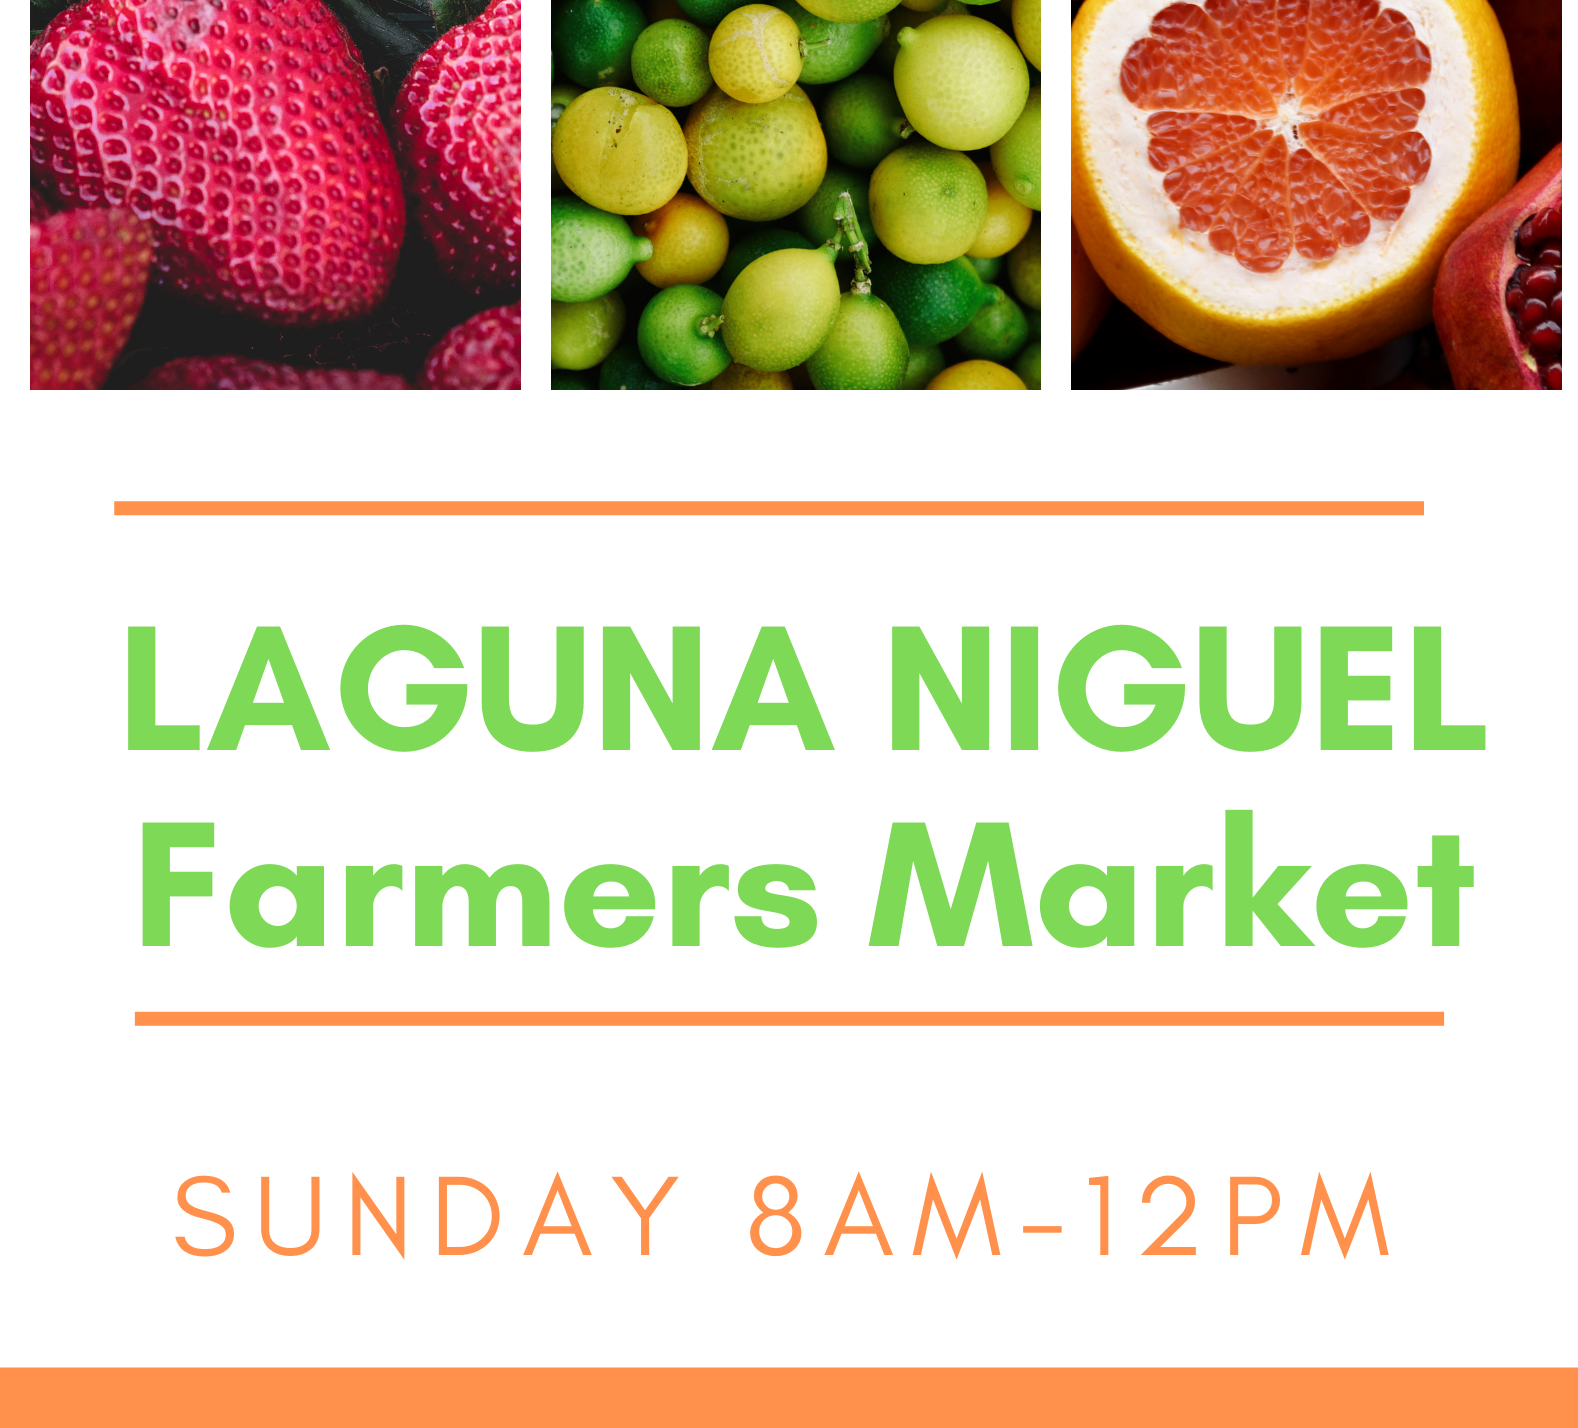 Laguna Niguel Farmers Market